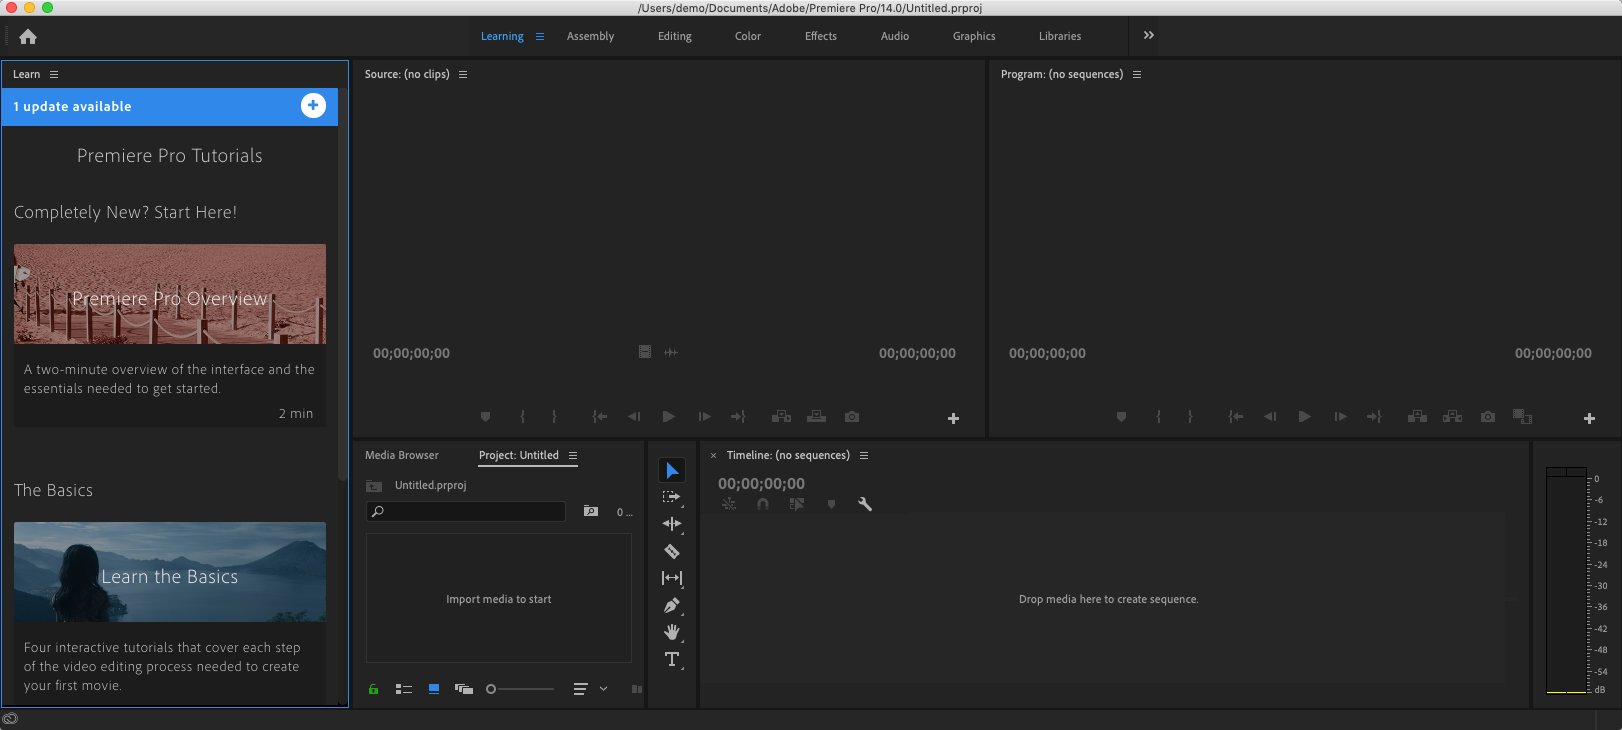 Adobe Premiere Pro 2020 14.0 : Main Window